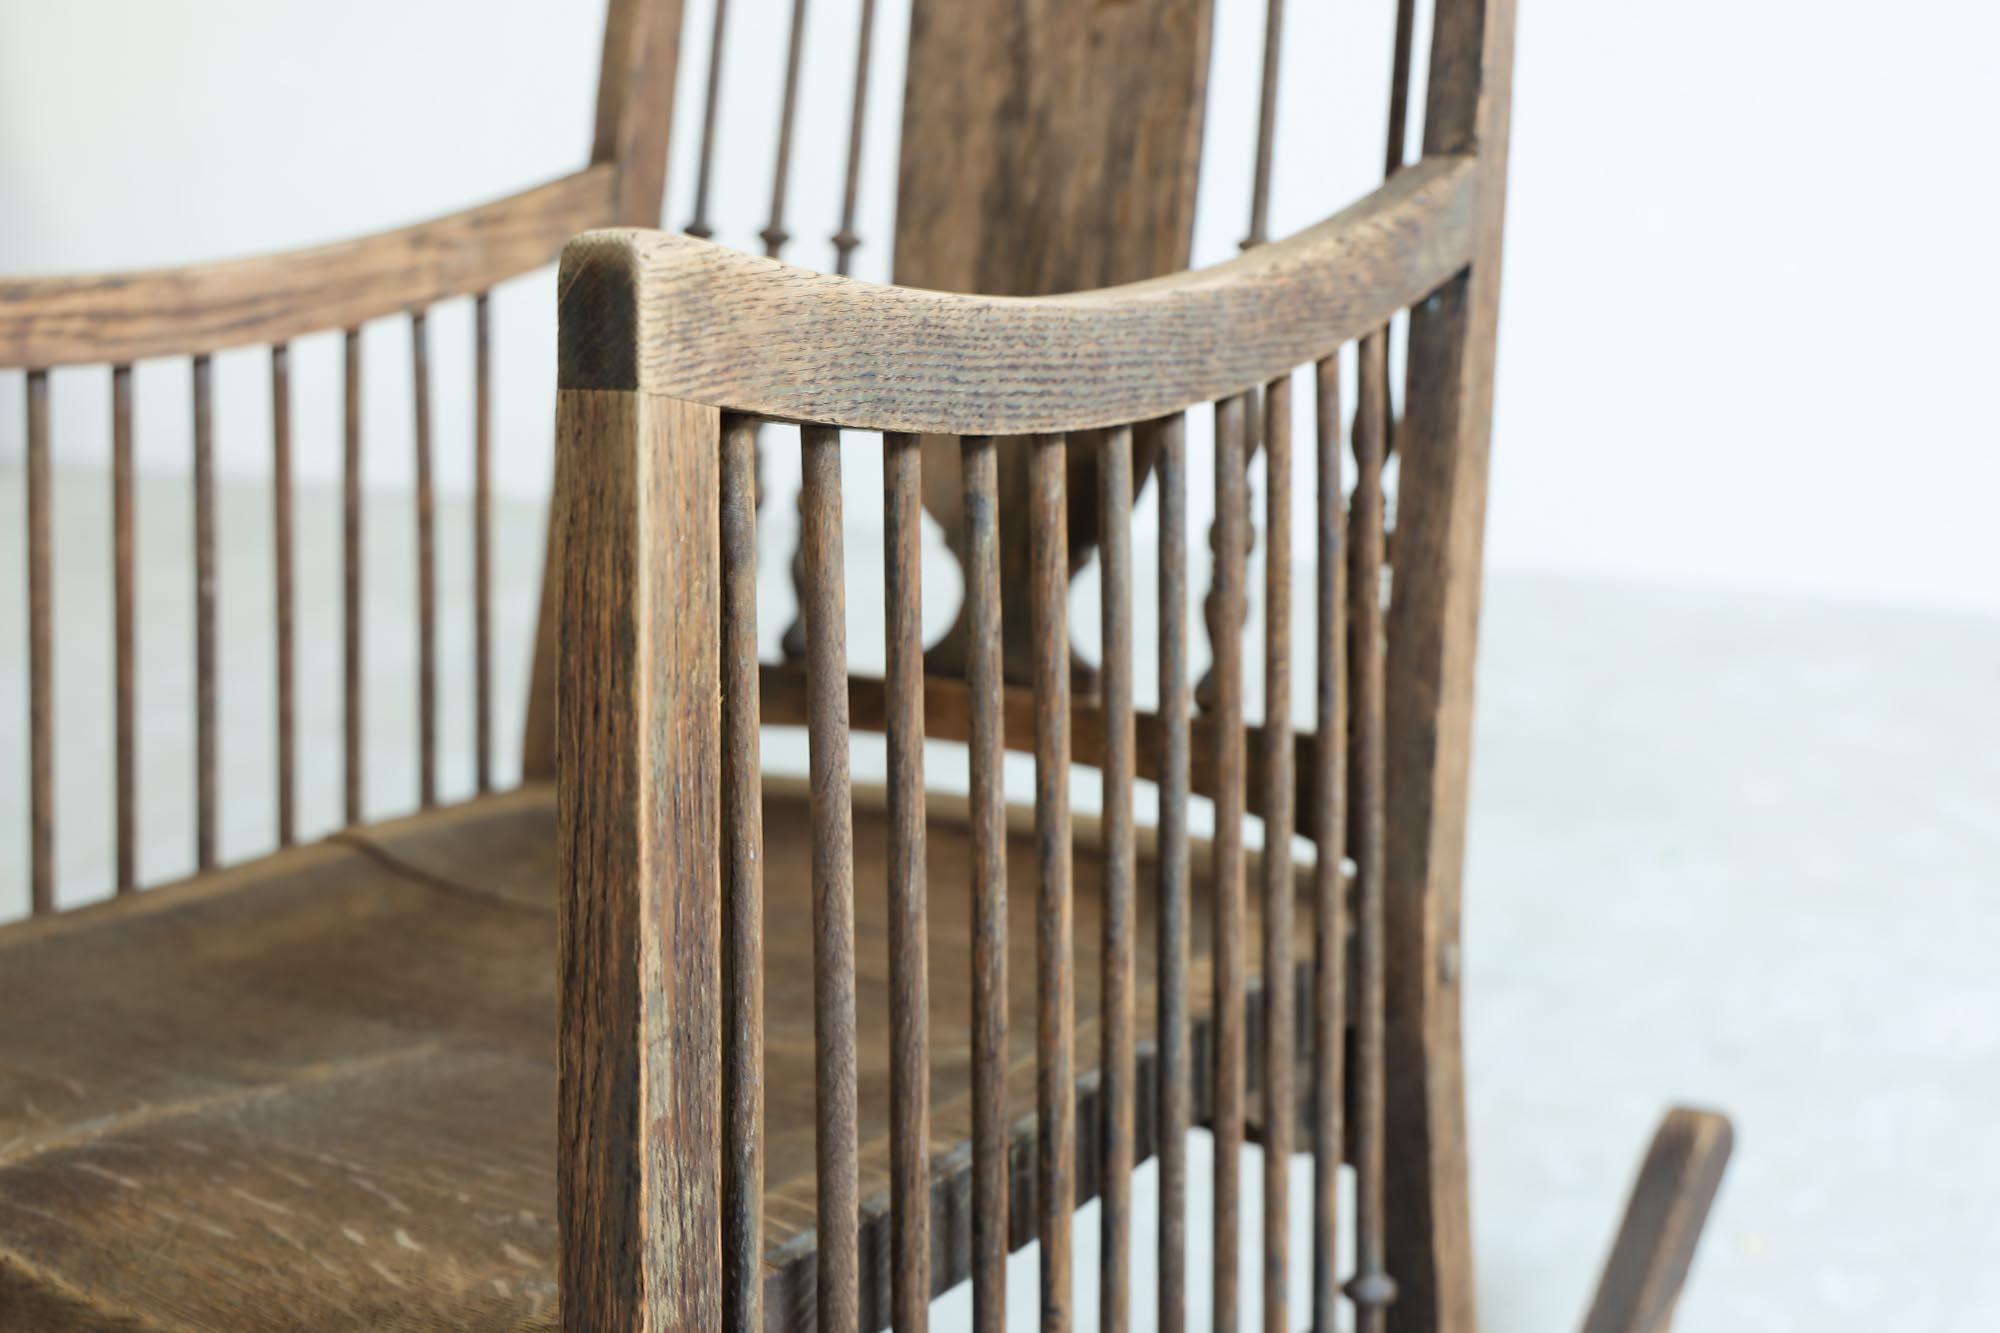 Hand-Carved Japanese Antique Rocking Chair, Primitive Japanese Wooden Cahair, Wabi-Sabi